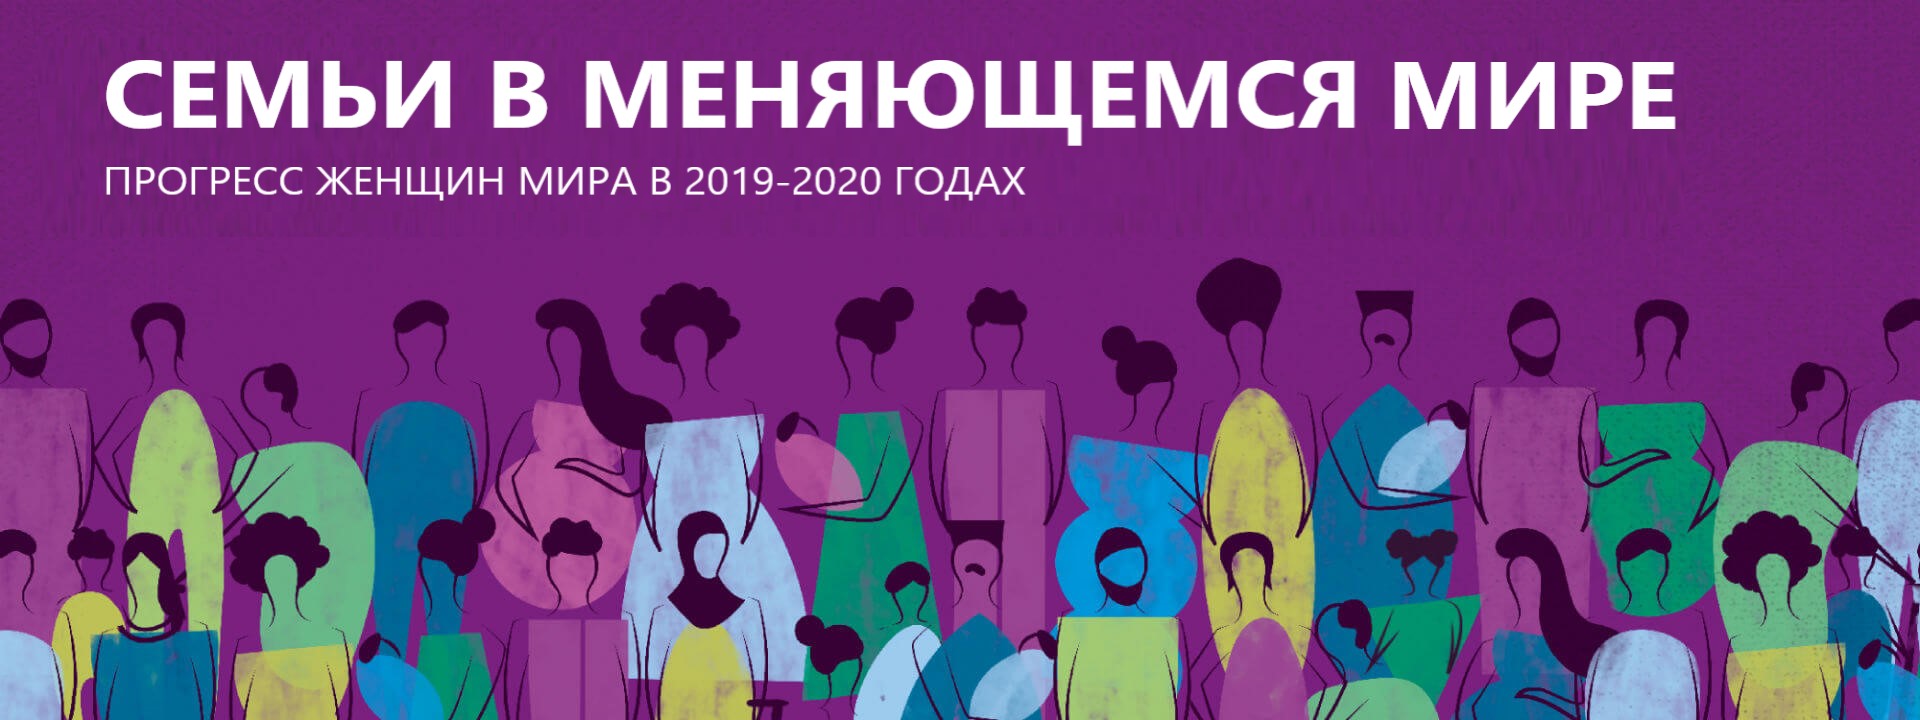 Progress-of-the-Worlds-Women-2019-banner RUS